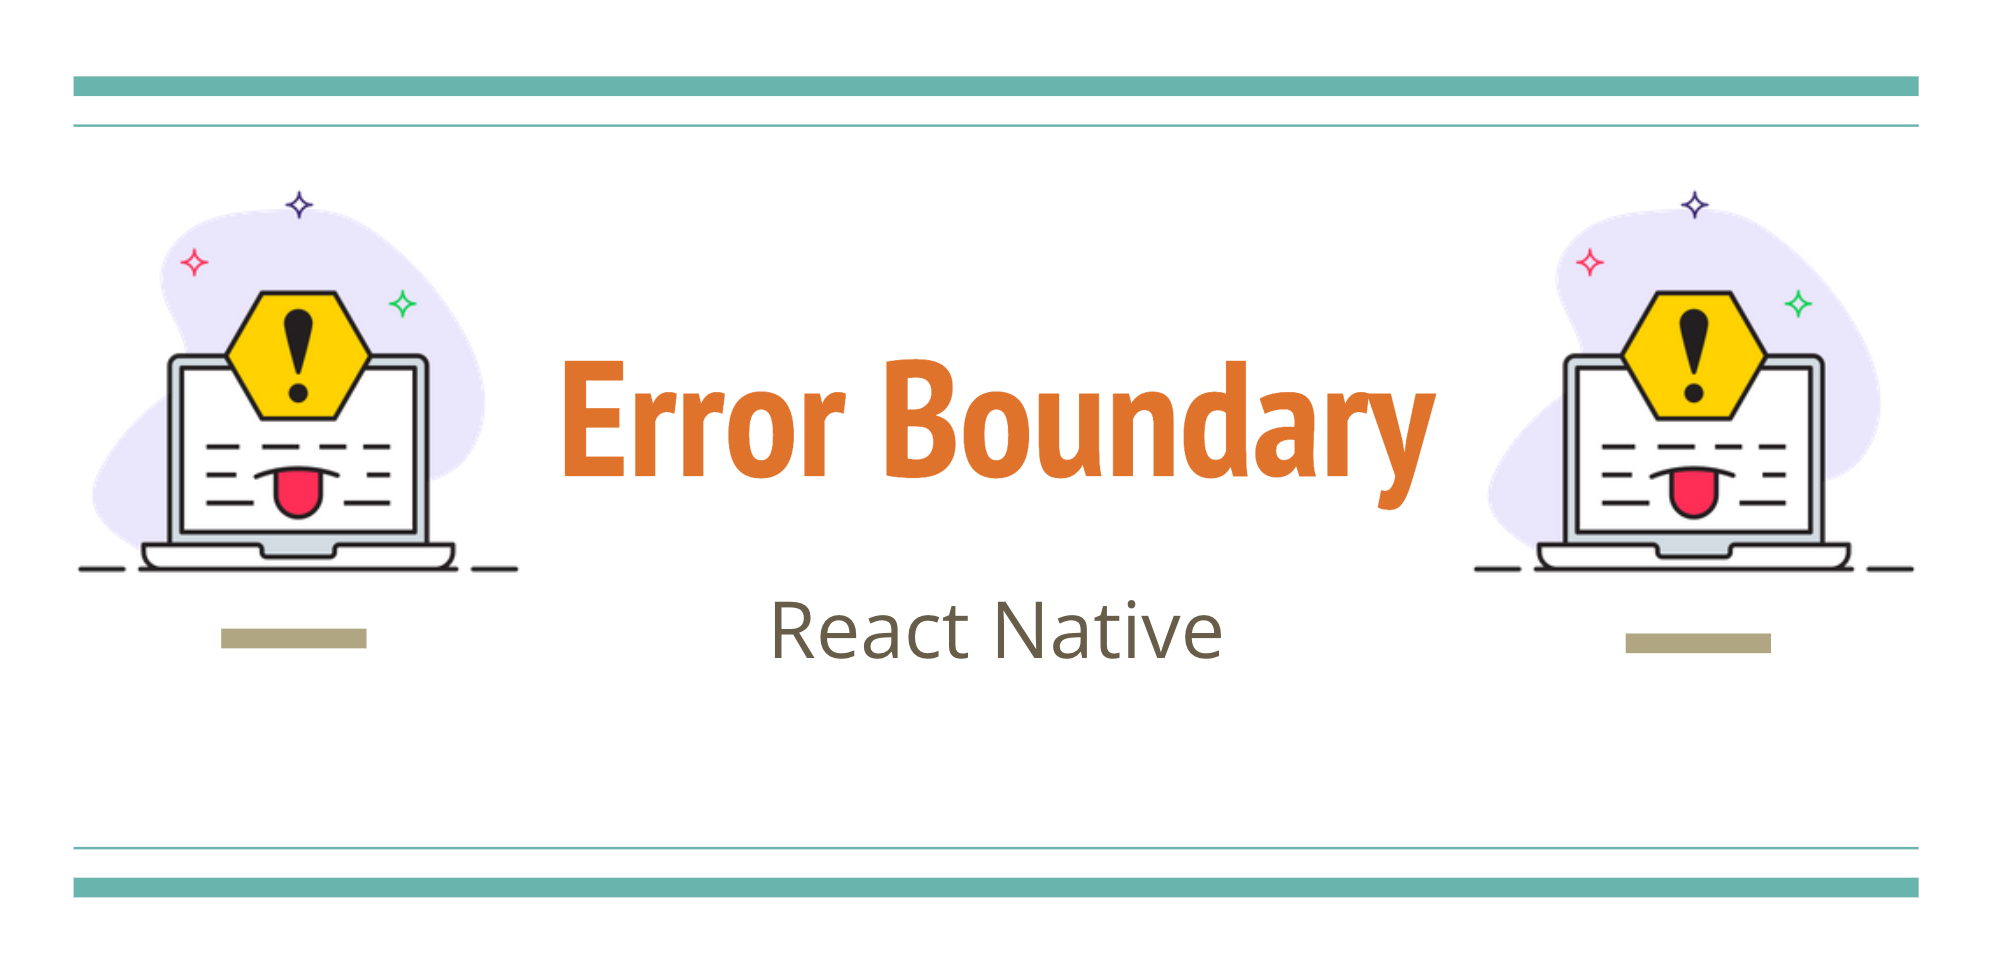 Error Boundary in React Native - Mobile App Development Services